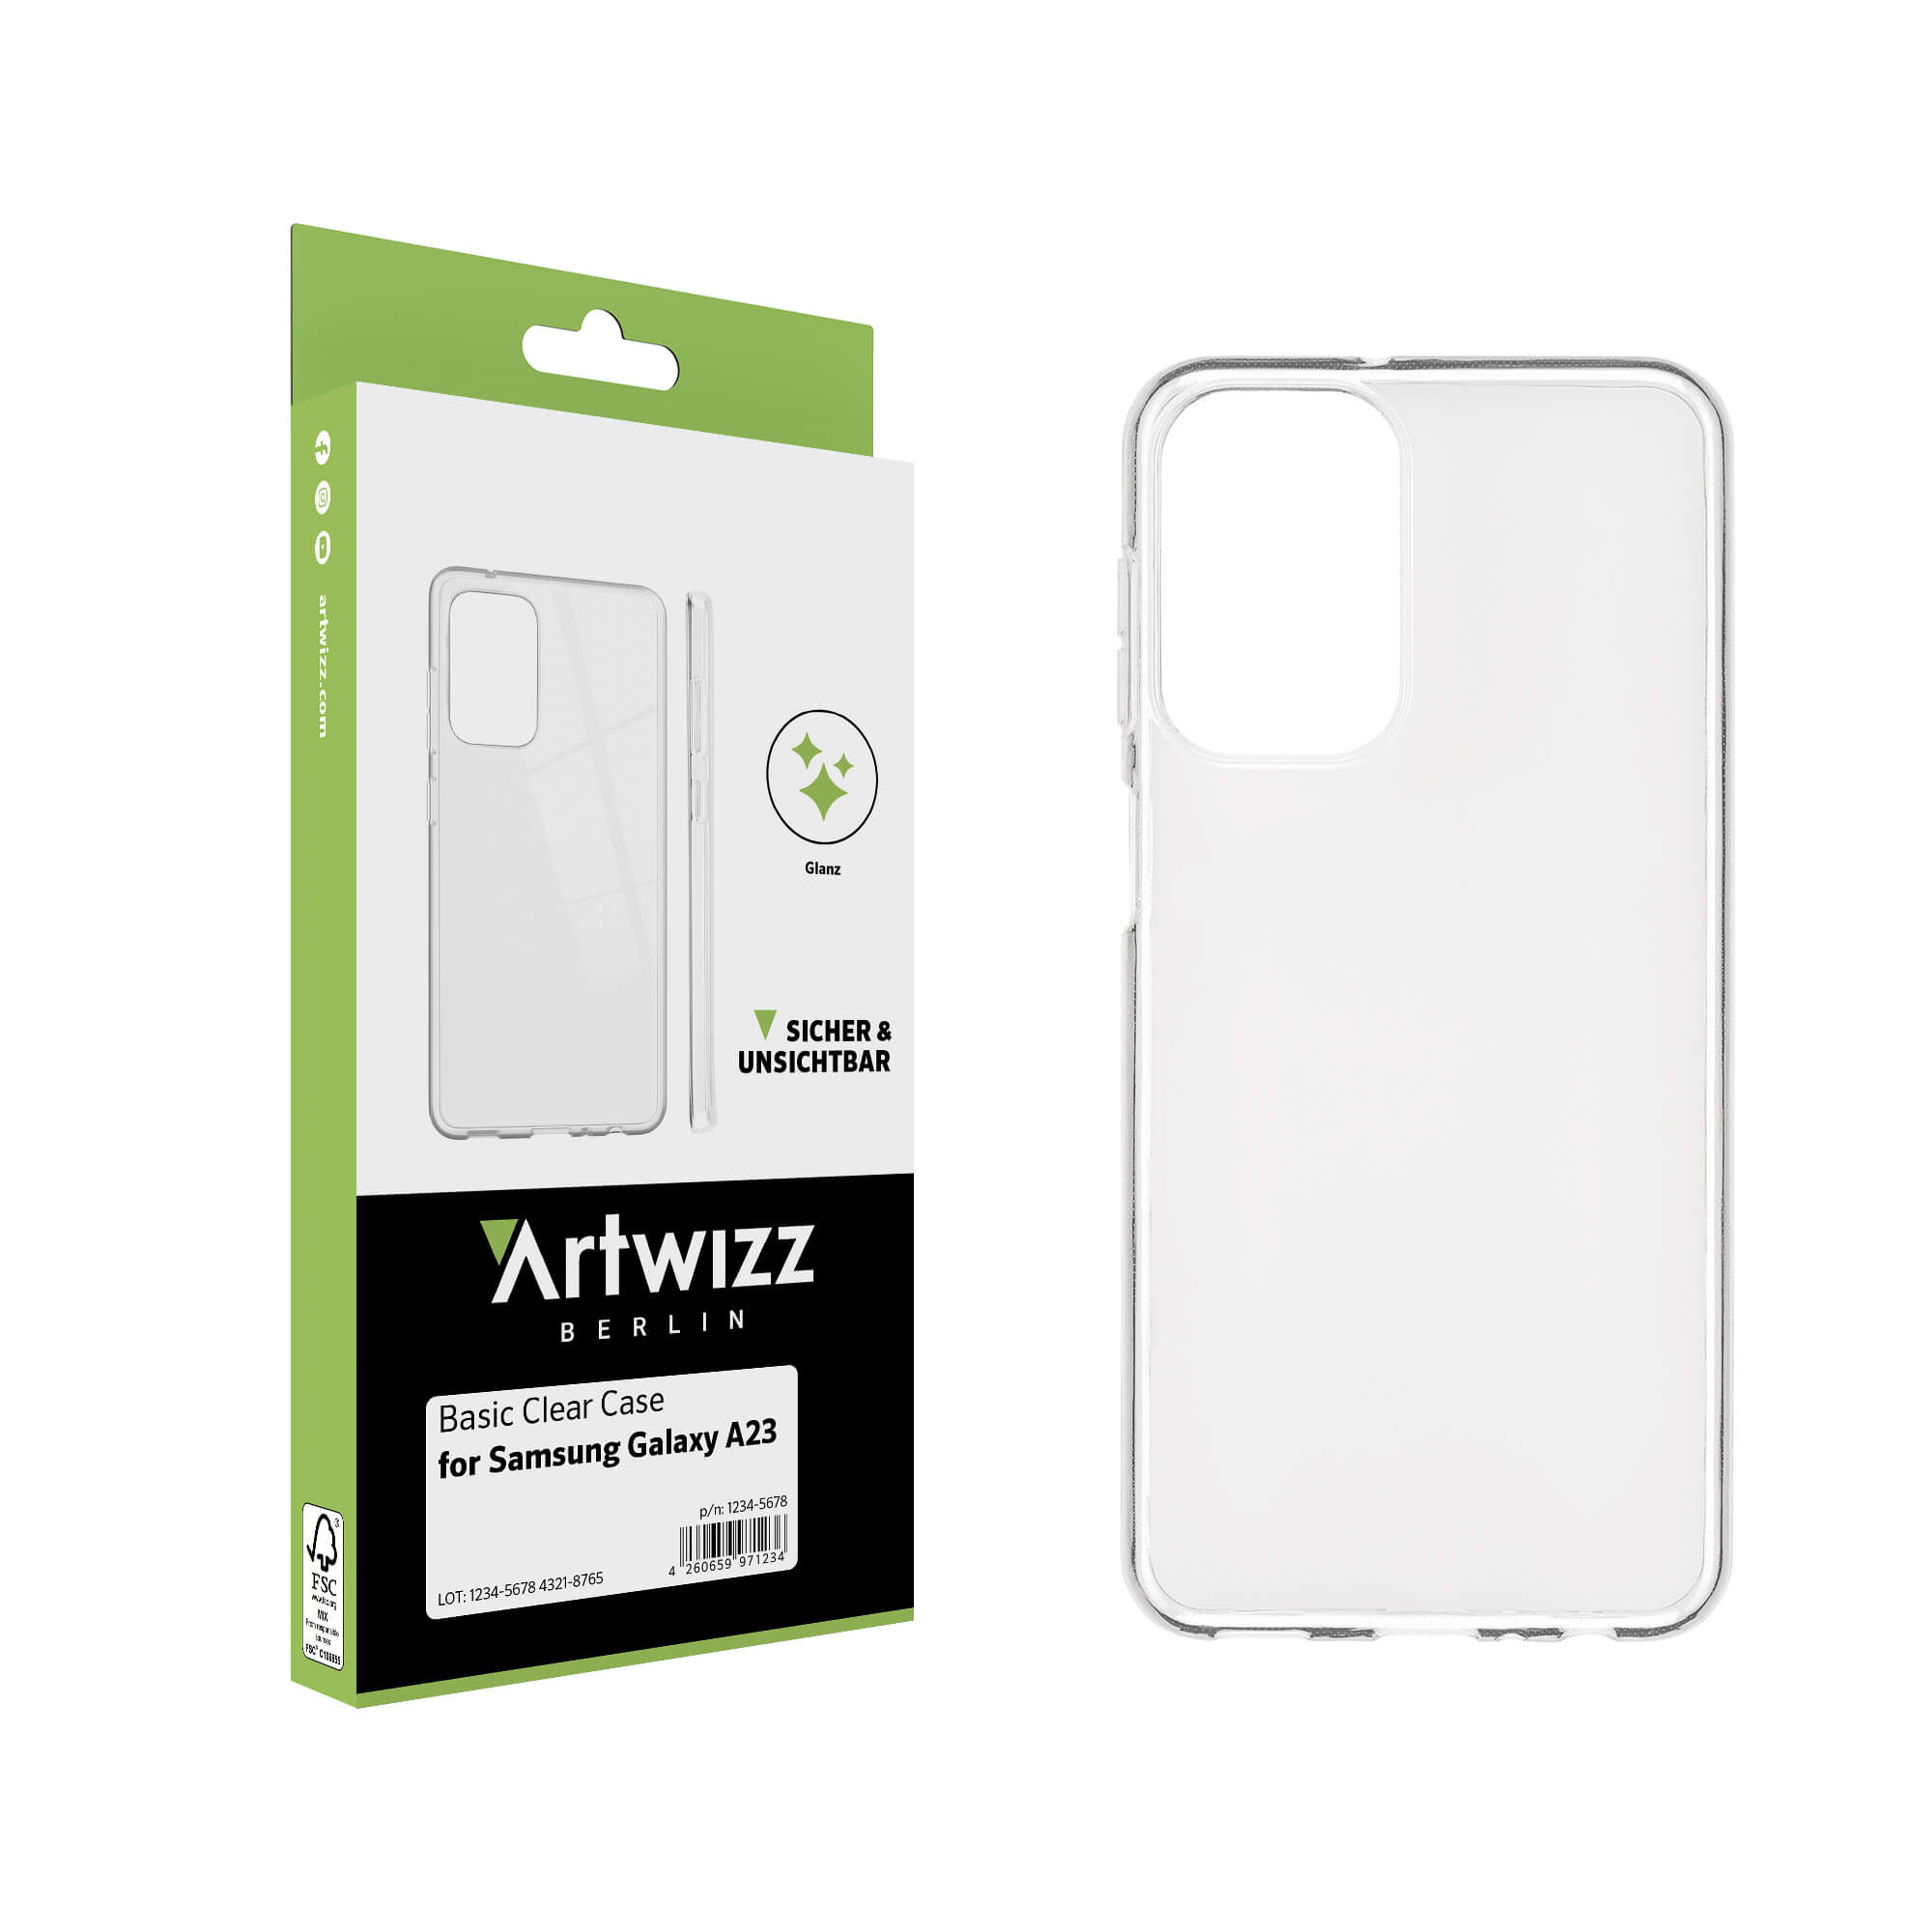 Clear Basic Transparent Galaxy ARTWIZZ A23, Case, Samsung, Backcover,